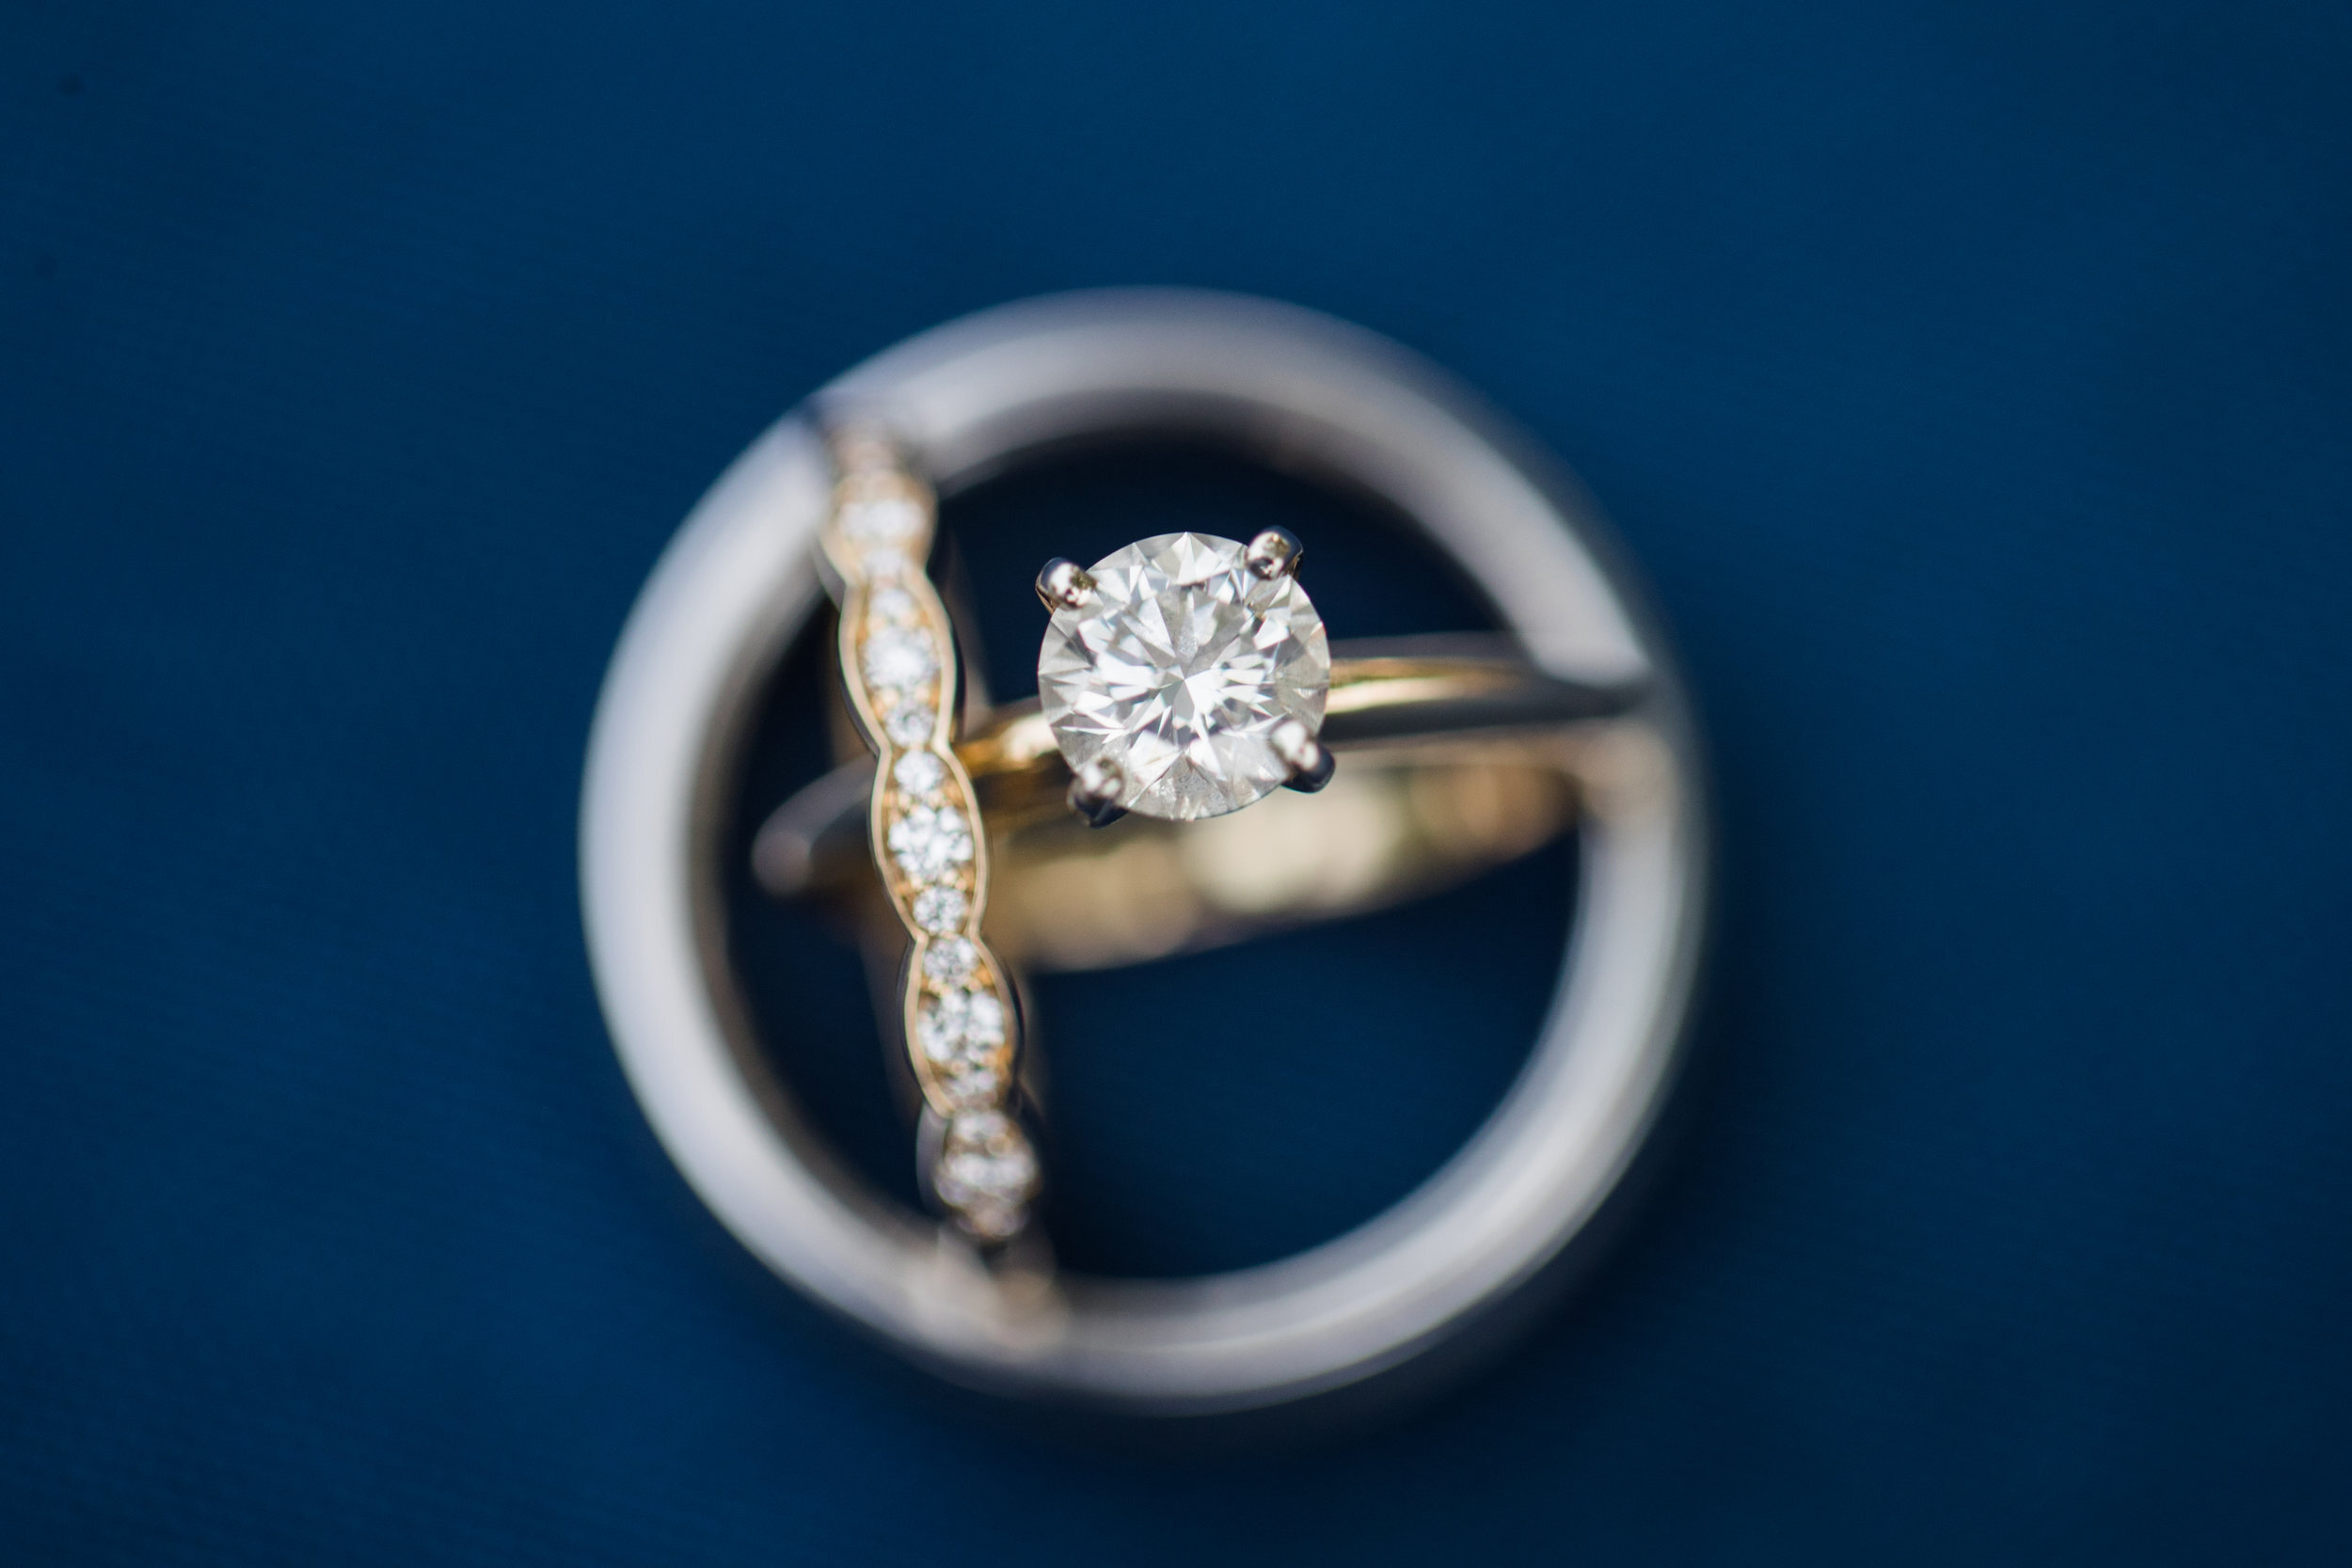 Best wedding ring image awesome wedding photographer in Maryland Megapixels media.jpg